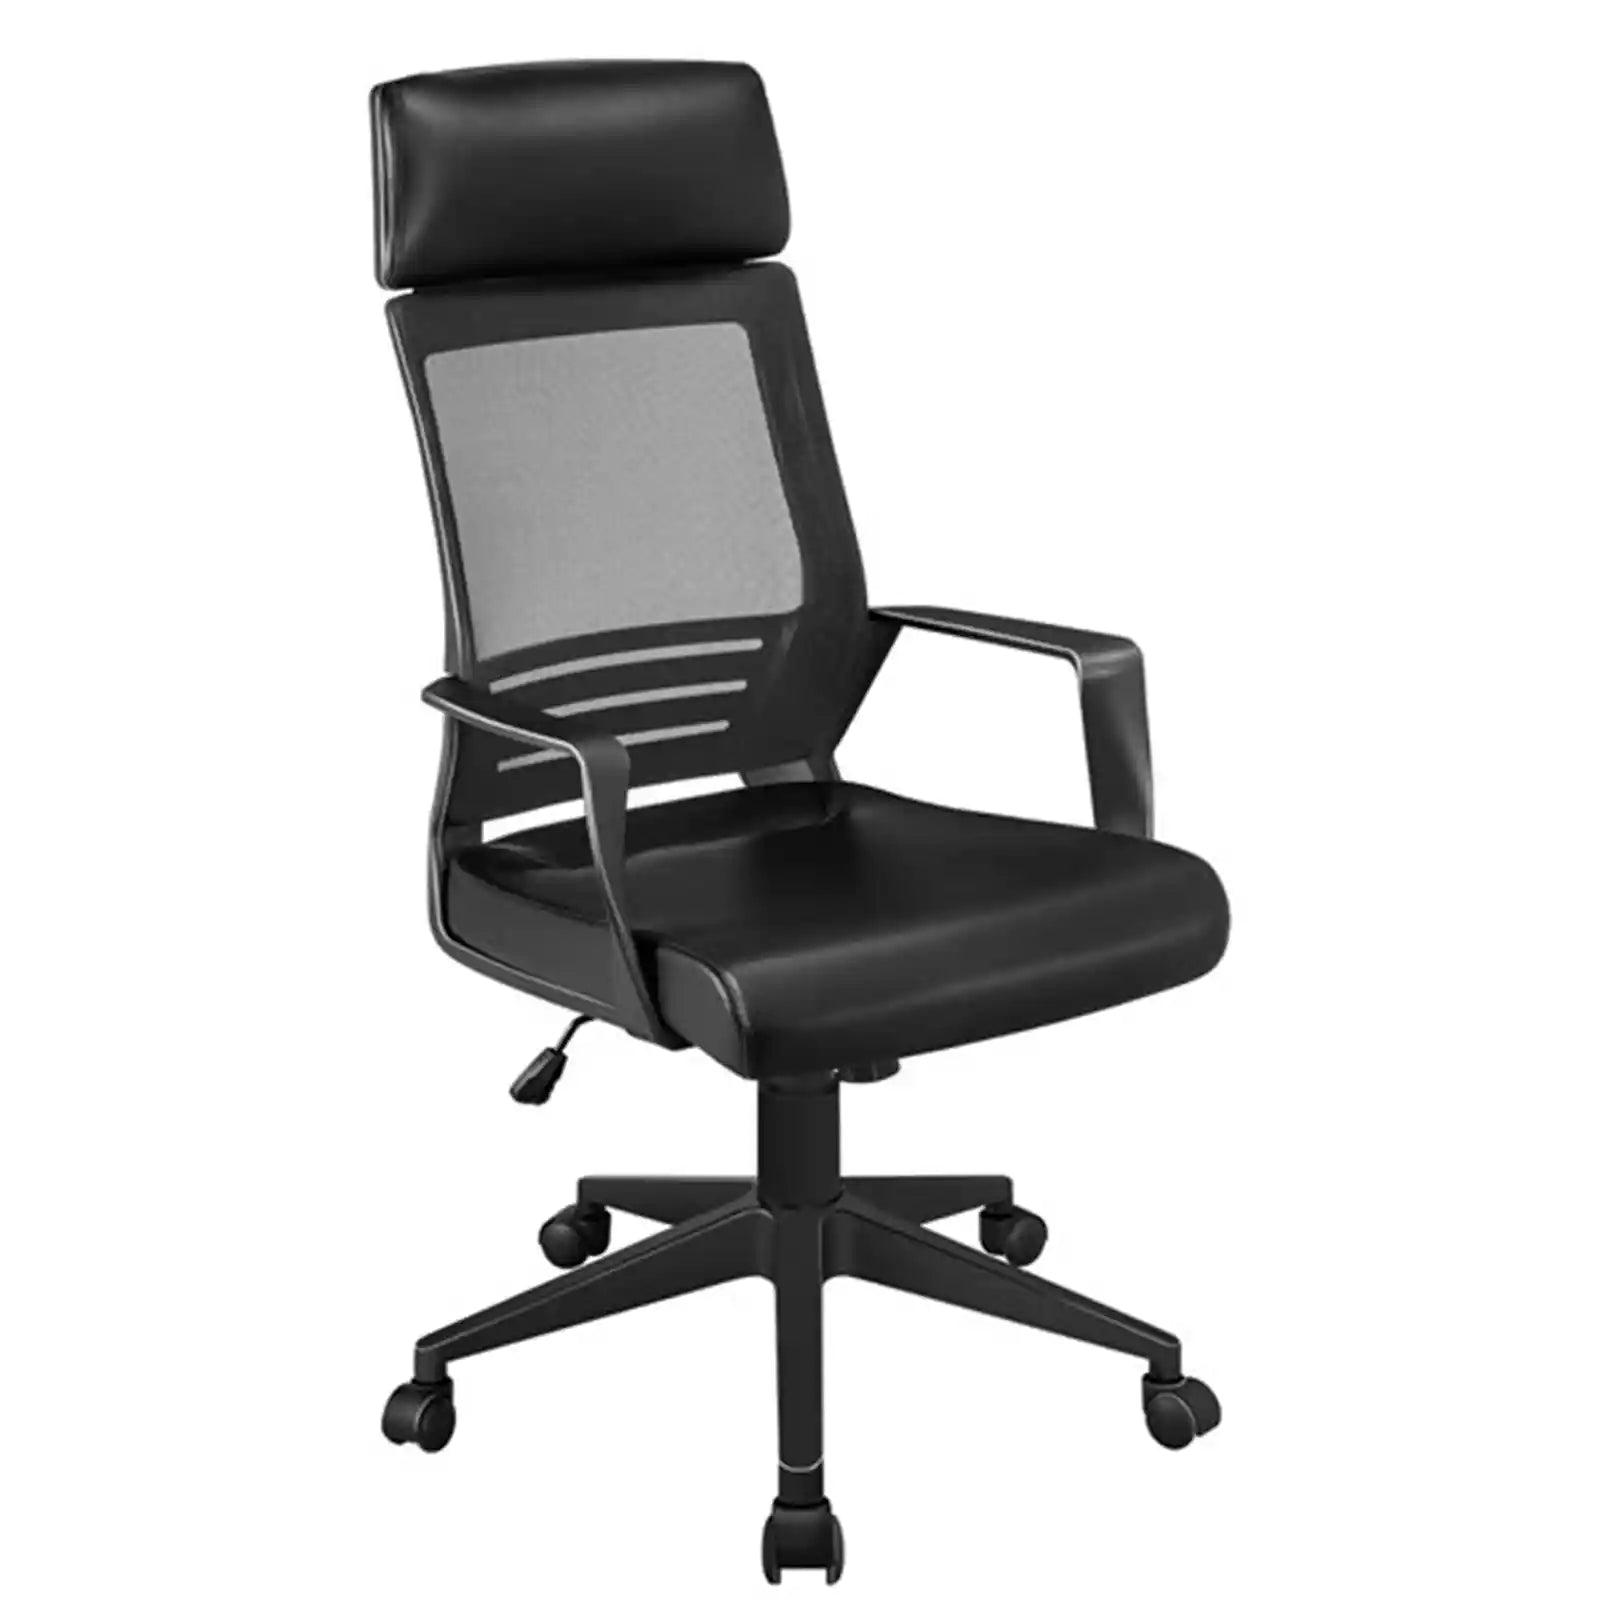 Adjustable Ergonomic Mesh Swivel Office Chair